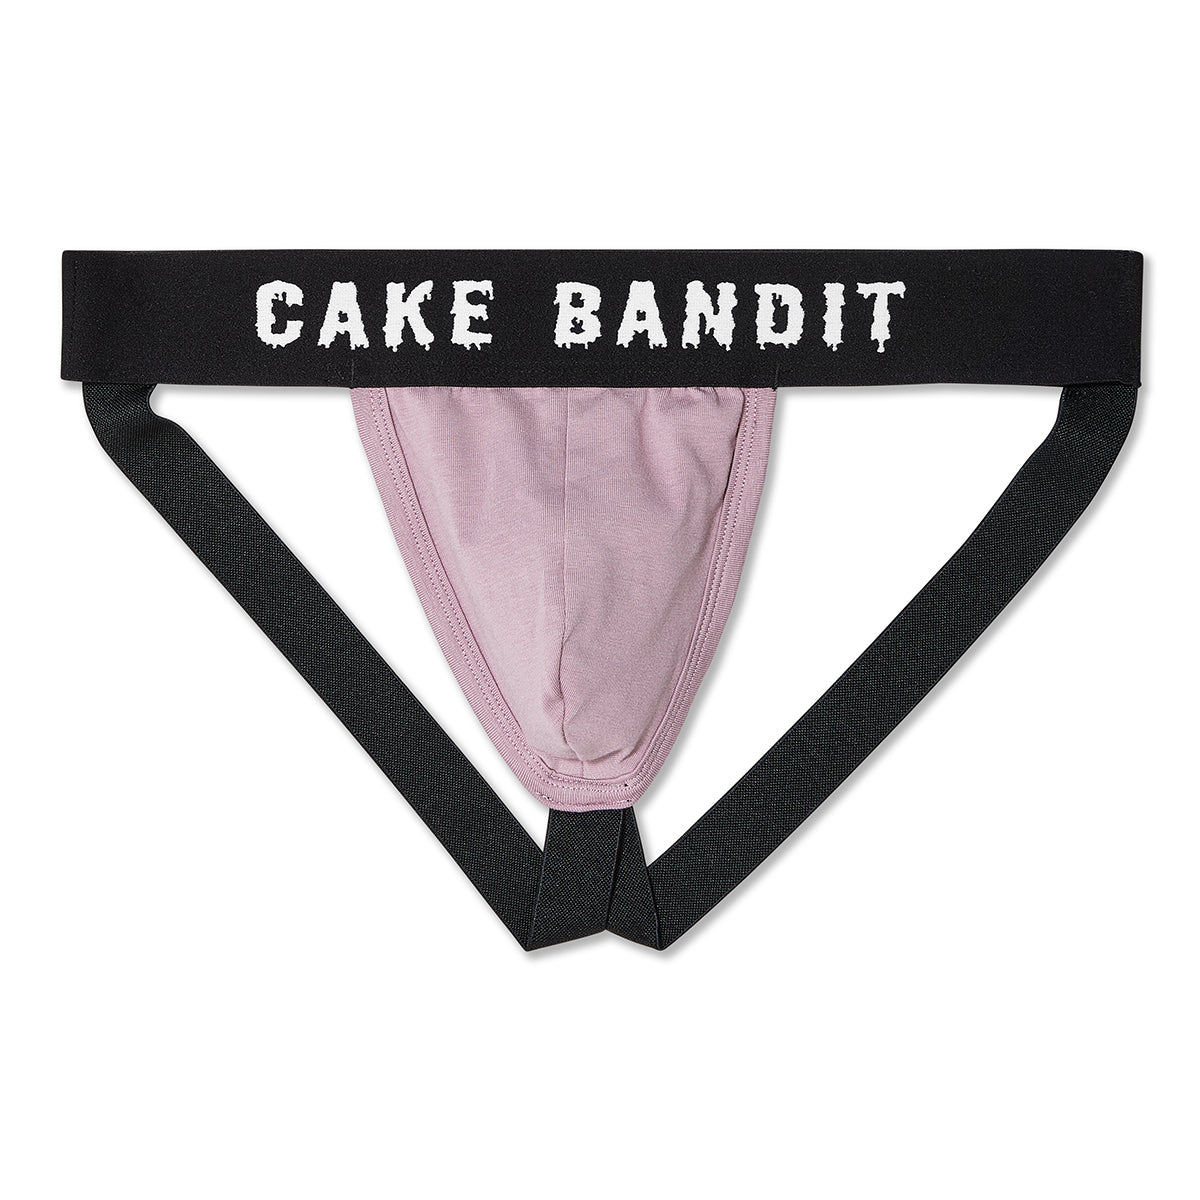 Cake Bandit Packing Briefs – Mod Club FTM